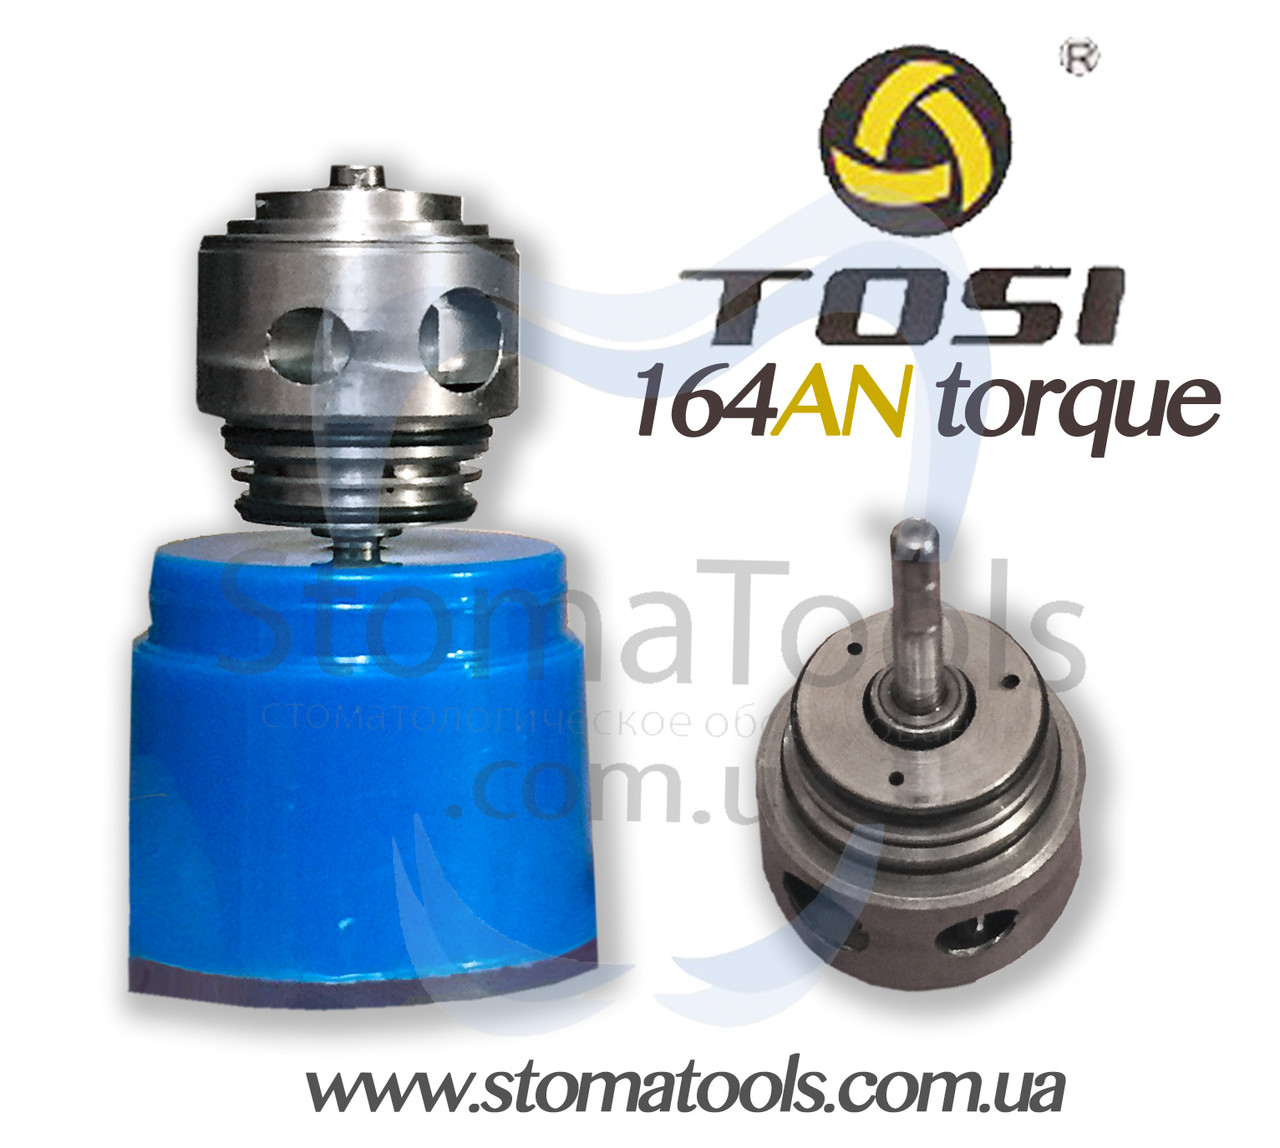 Роторна група TOSI TX-164 AN Torque (ортопедична головка)